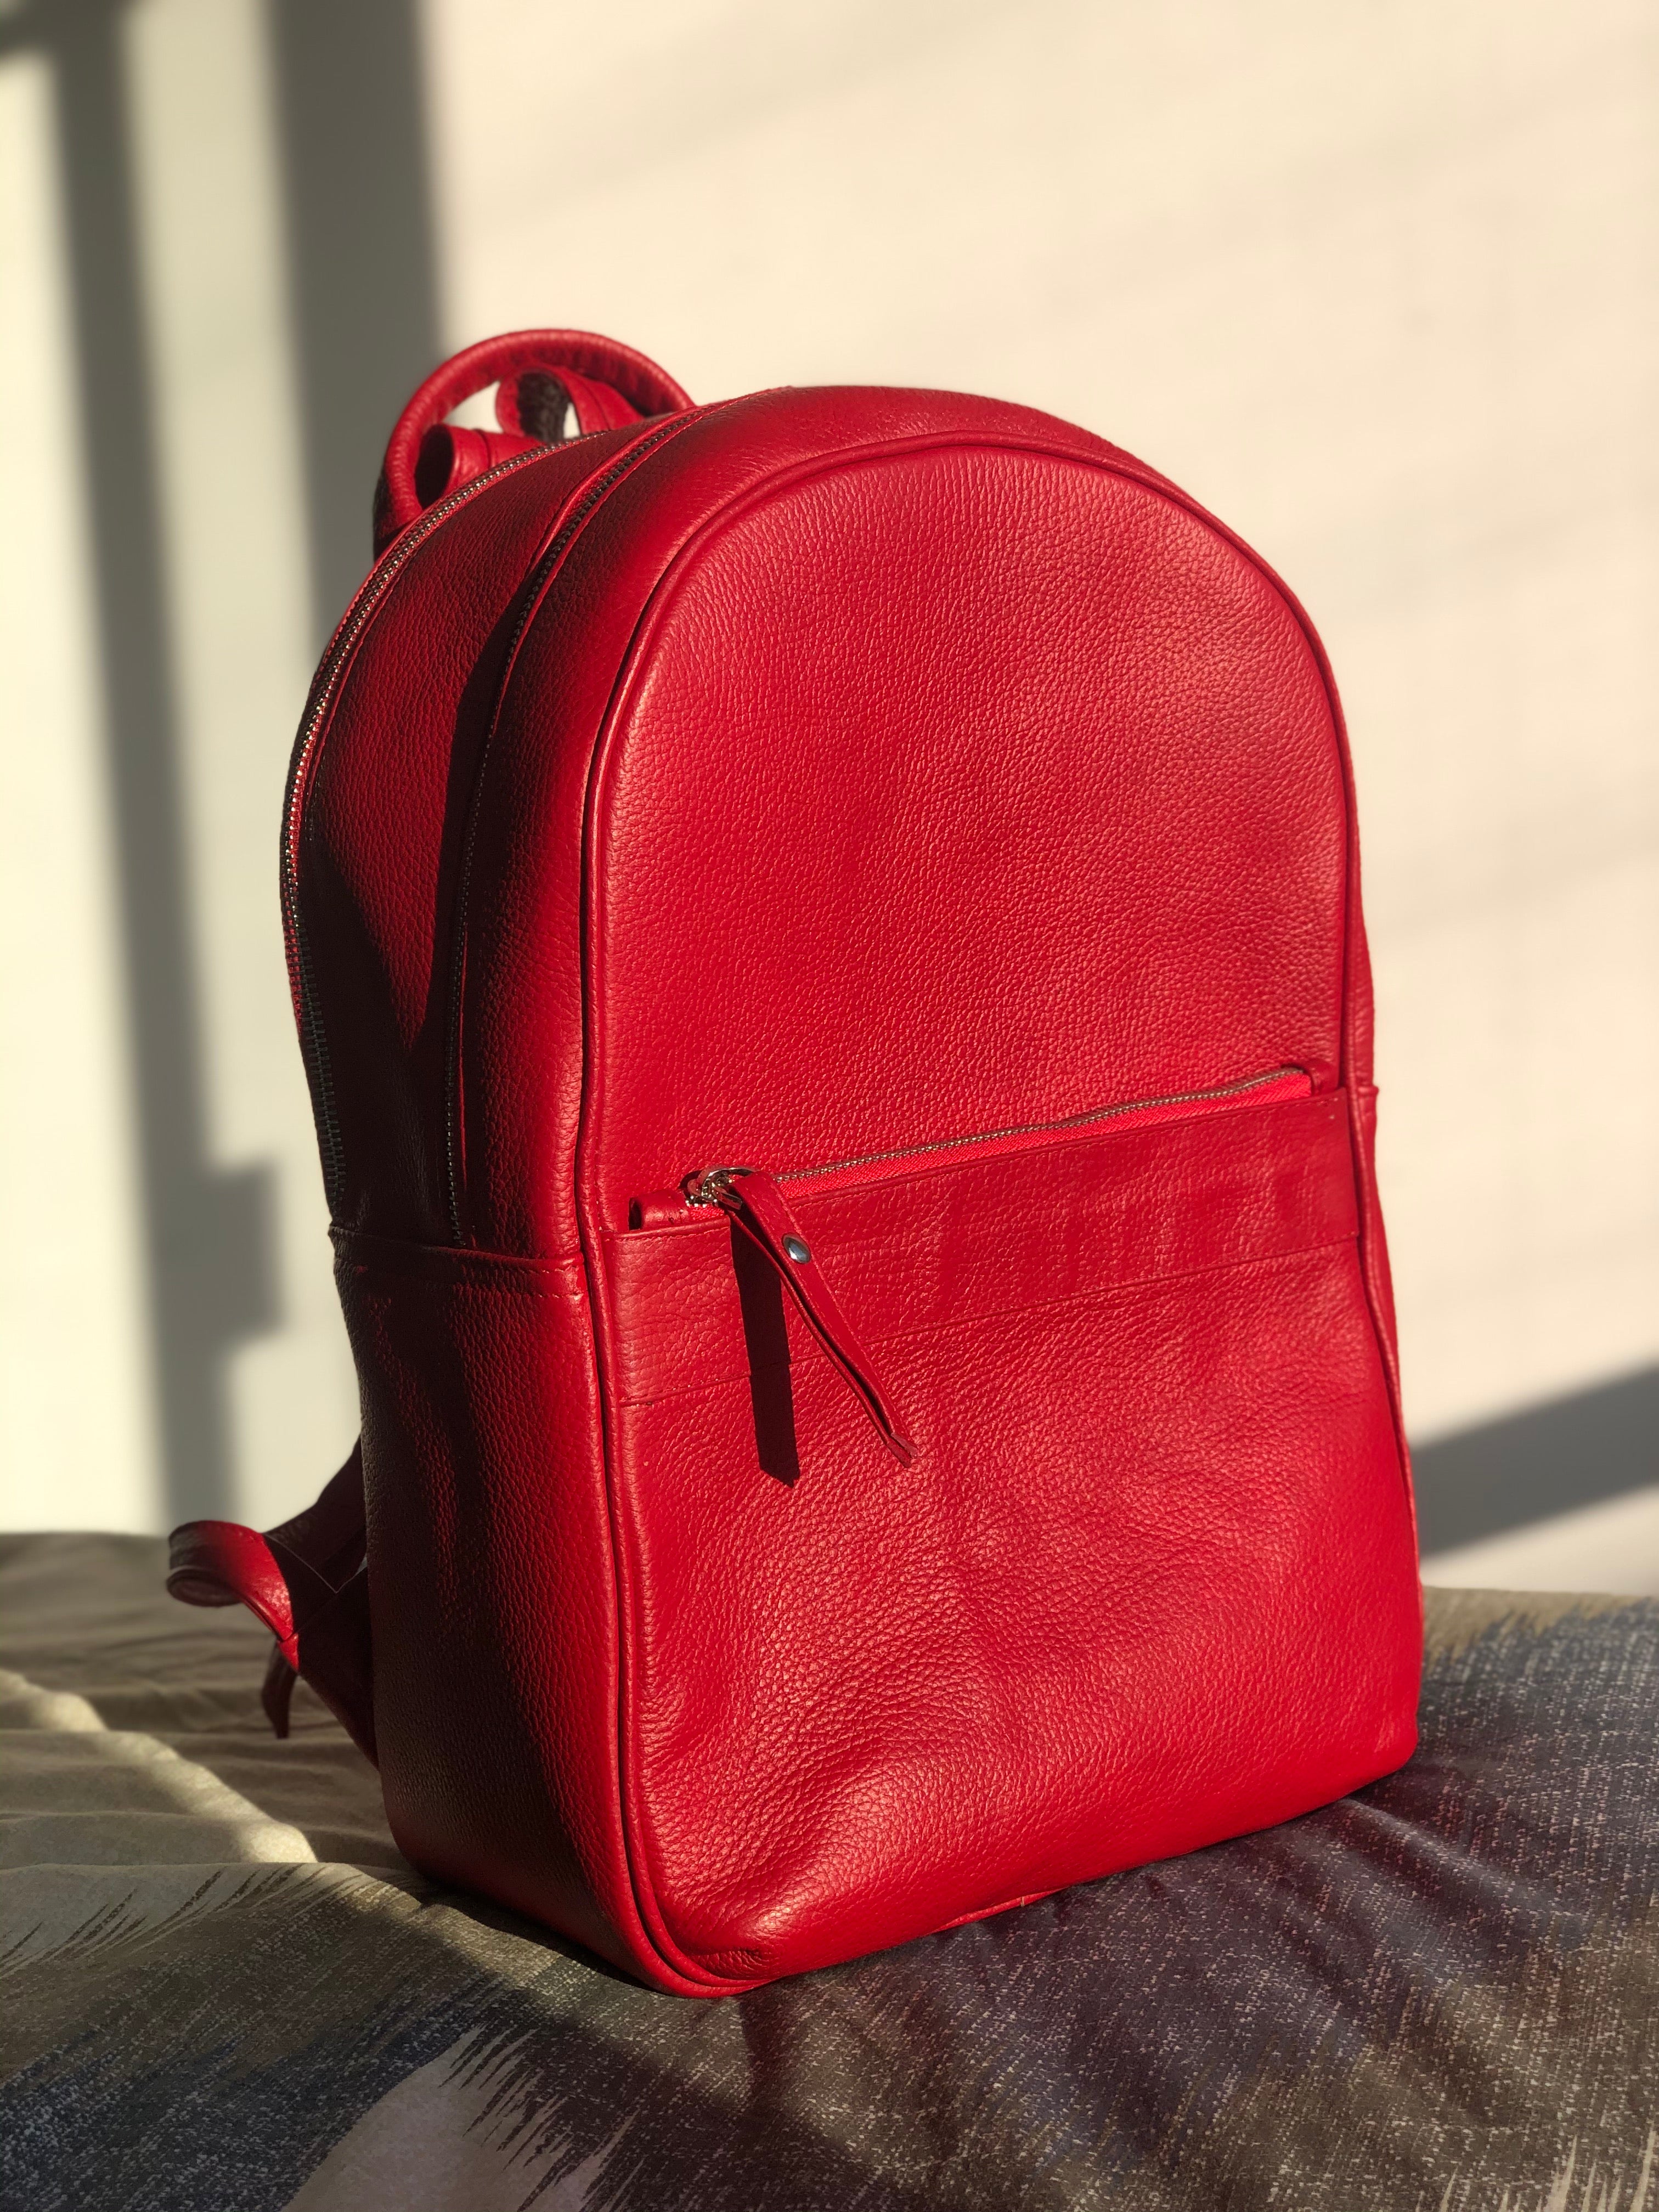 Backpack Iconic